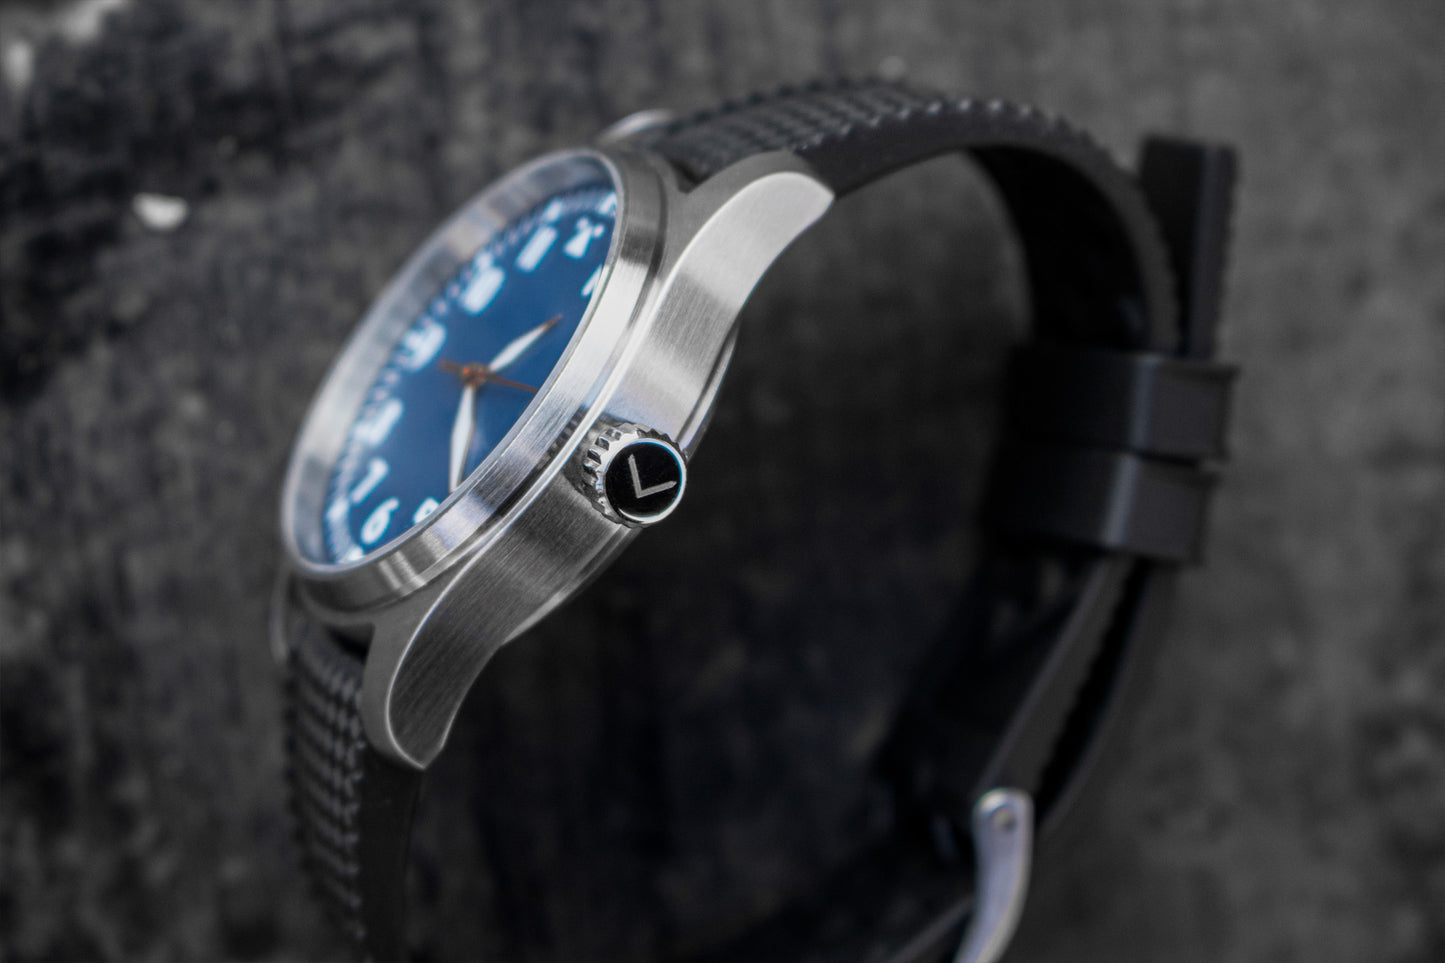 Enoksen 'Fly' E03/E Steel Blue Swiss Edition - Mechanical Pilot's Watch - 39mm